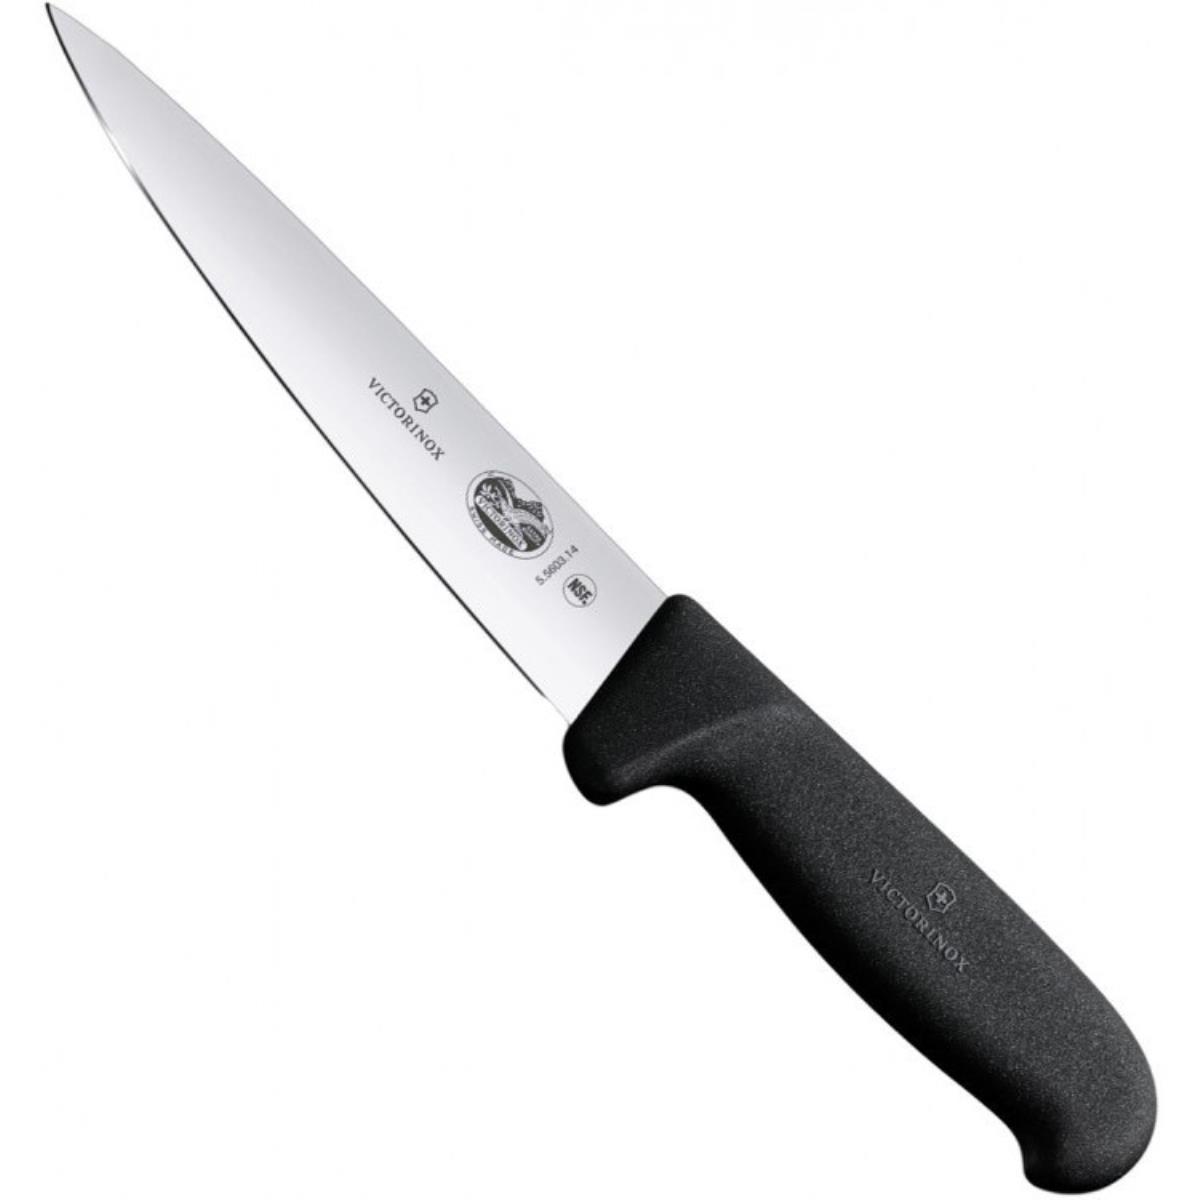 Нож 5.5603.14 обвалочный VICTORINOX нож victorinox classic sd colors dark illusion 0 6223 3g чёрный 7 функций 58мм